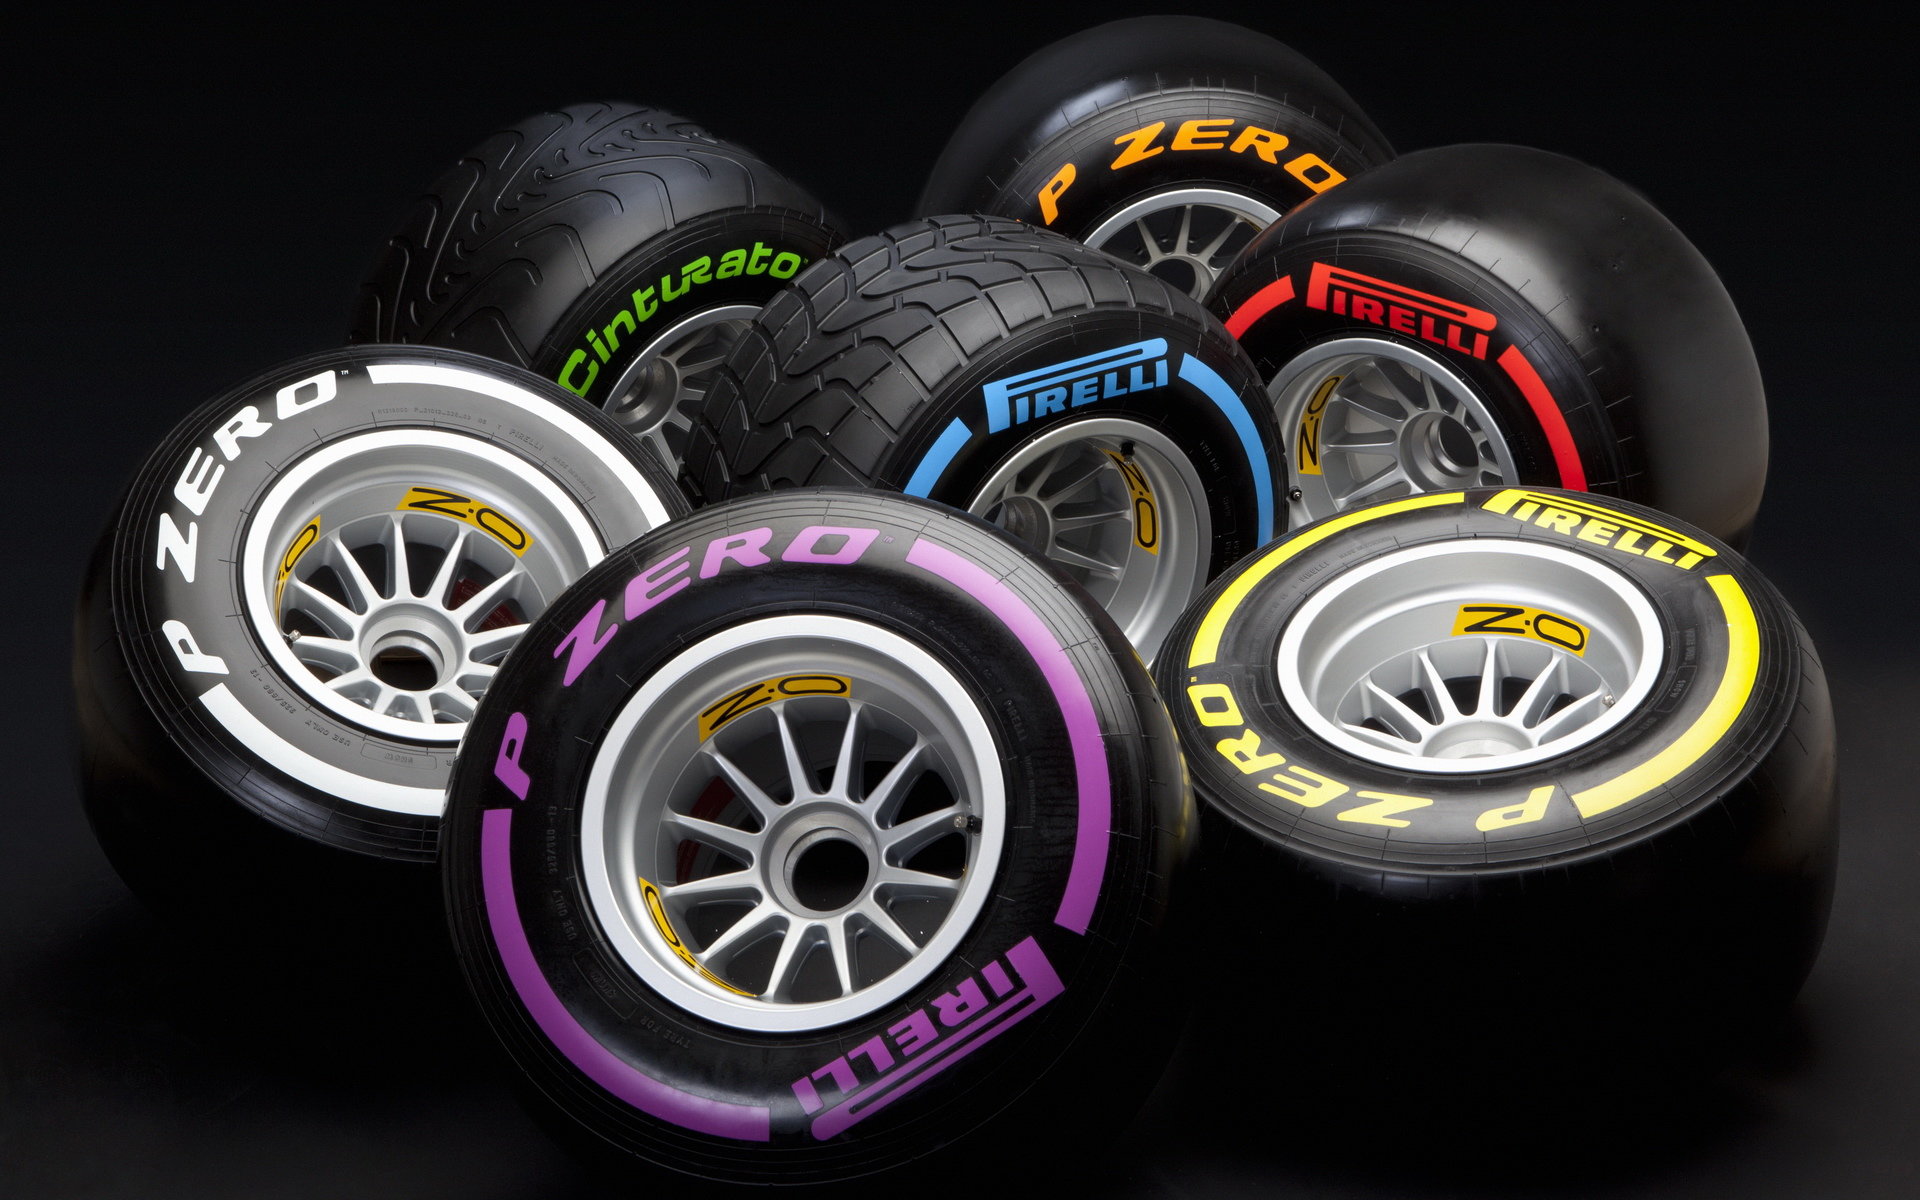 Pneumatiky Pirelli pro sezónu 2016